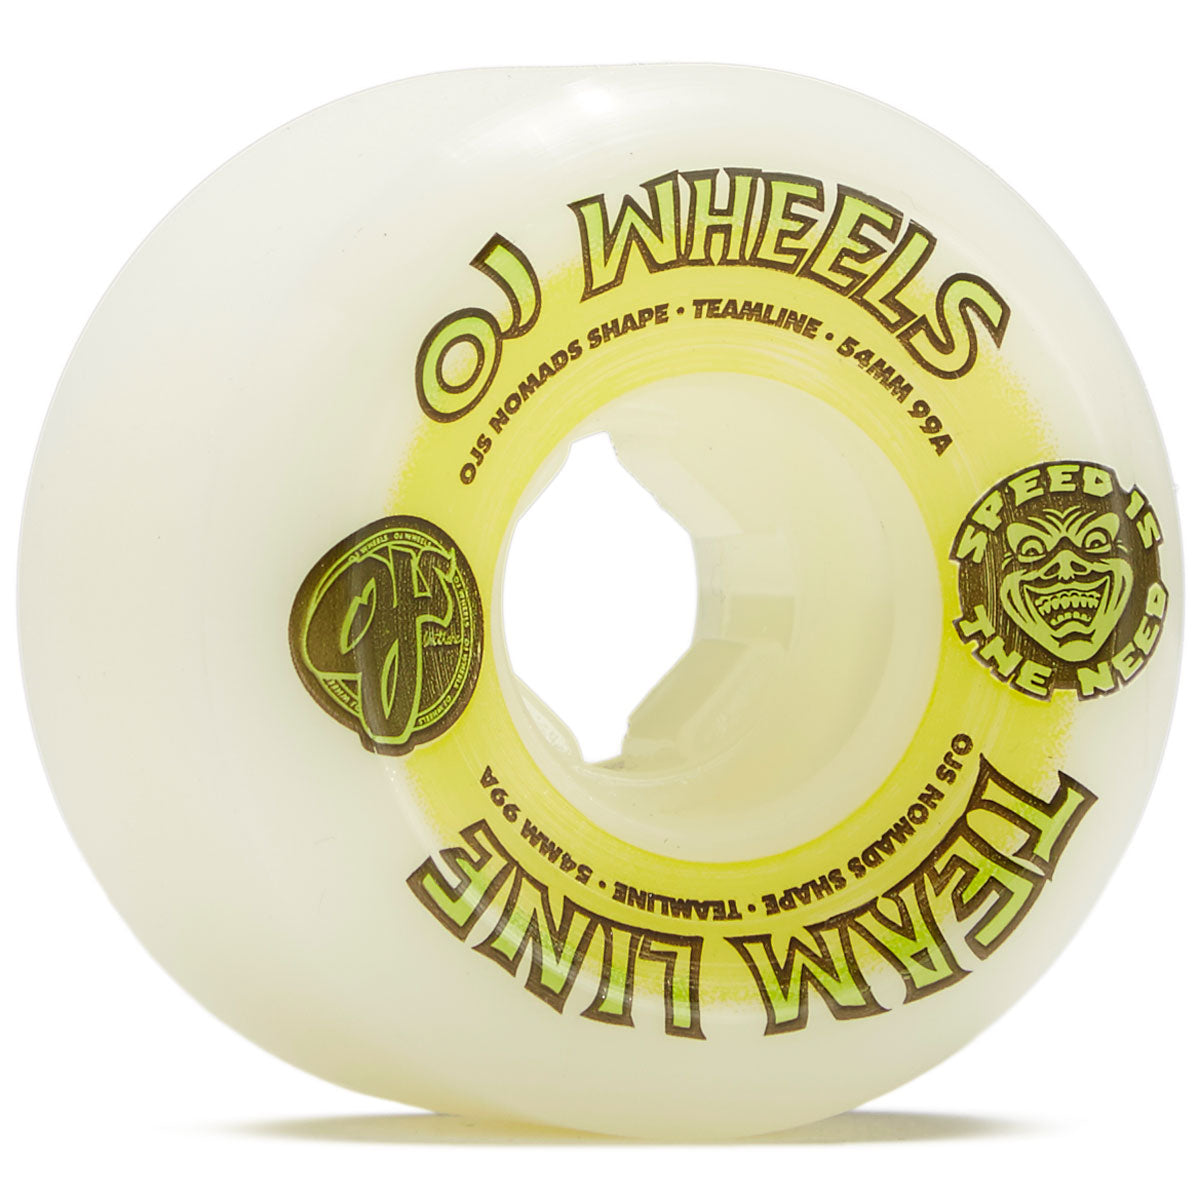 OJ Team Line Original Hardline 99a Skateboard Wheels - White/Yellow/Green - 54mm image 1